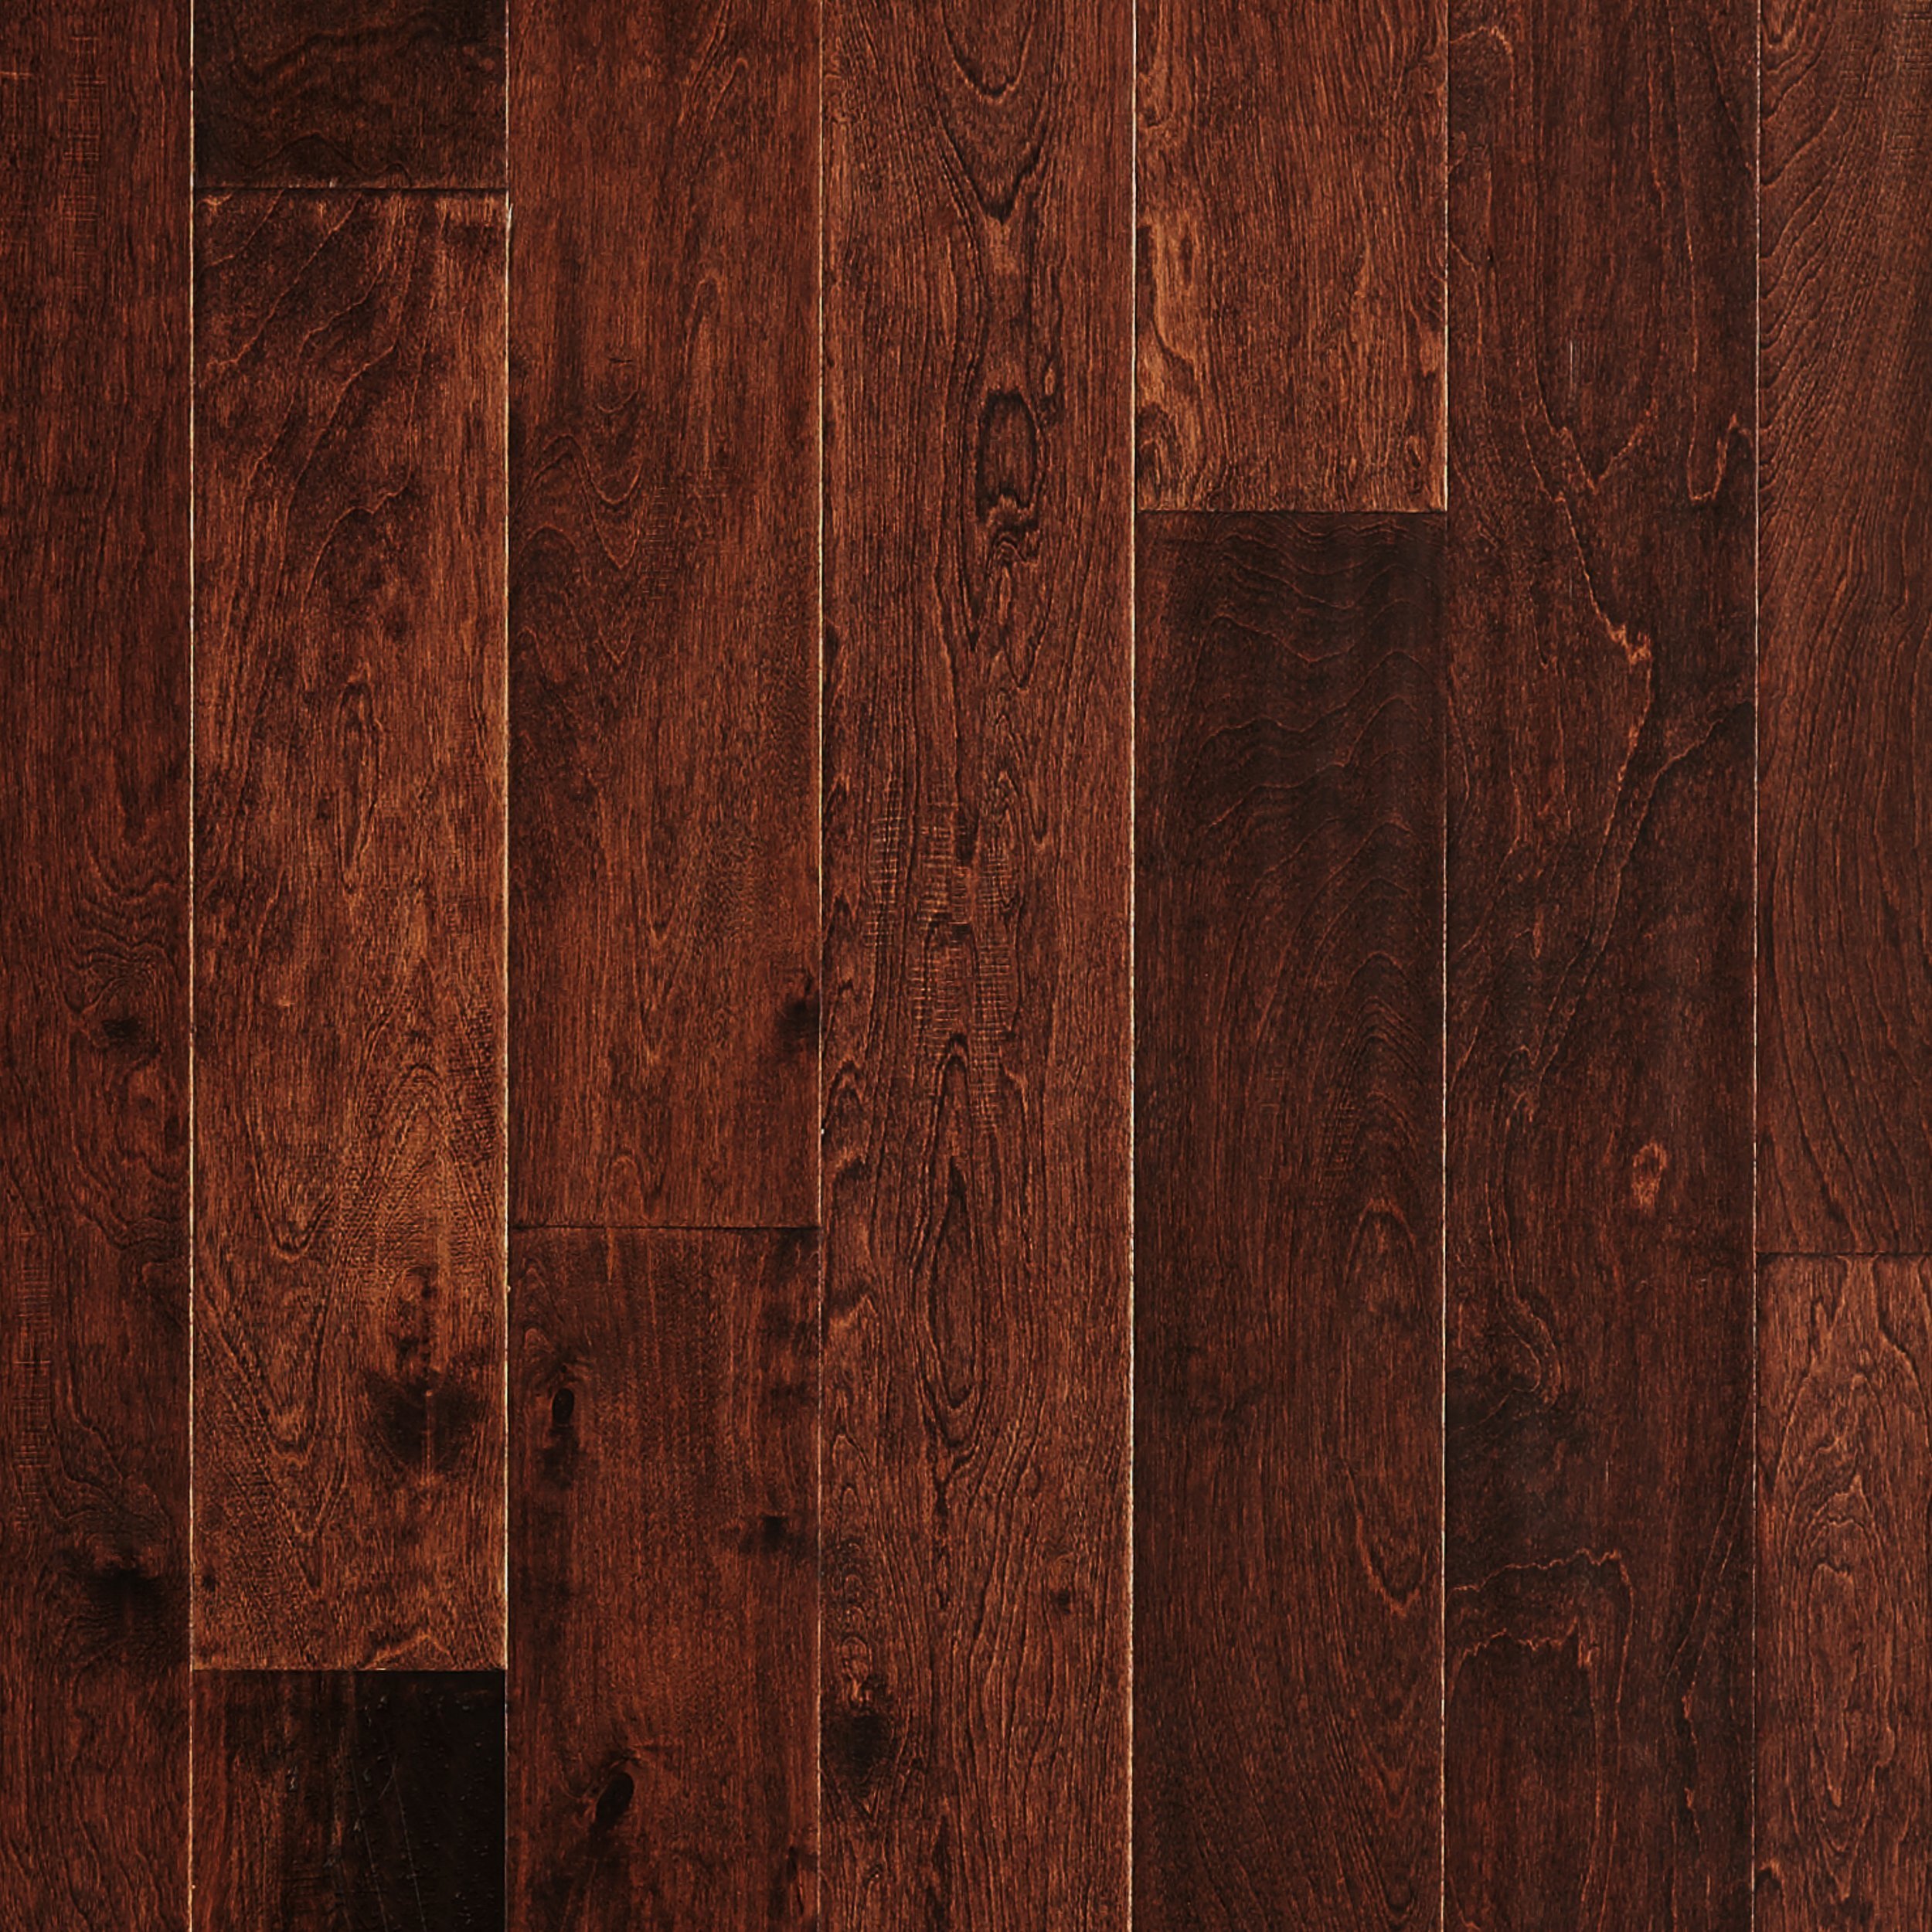 Floor and Decor Engineered Hardwood Luxury Engineered Hardwood Flooring